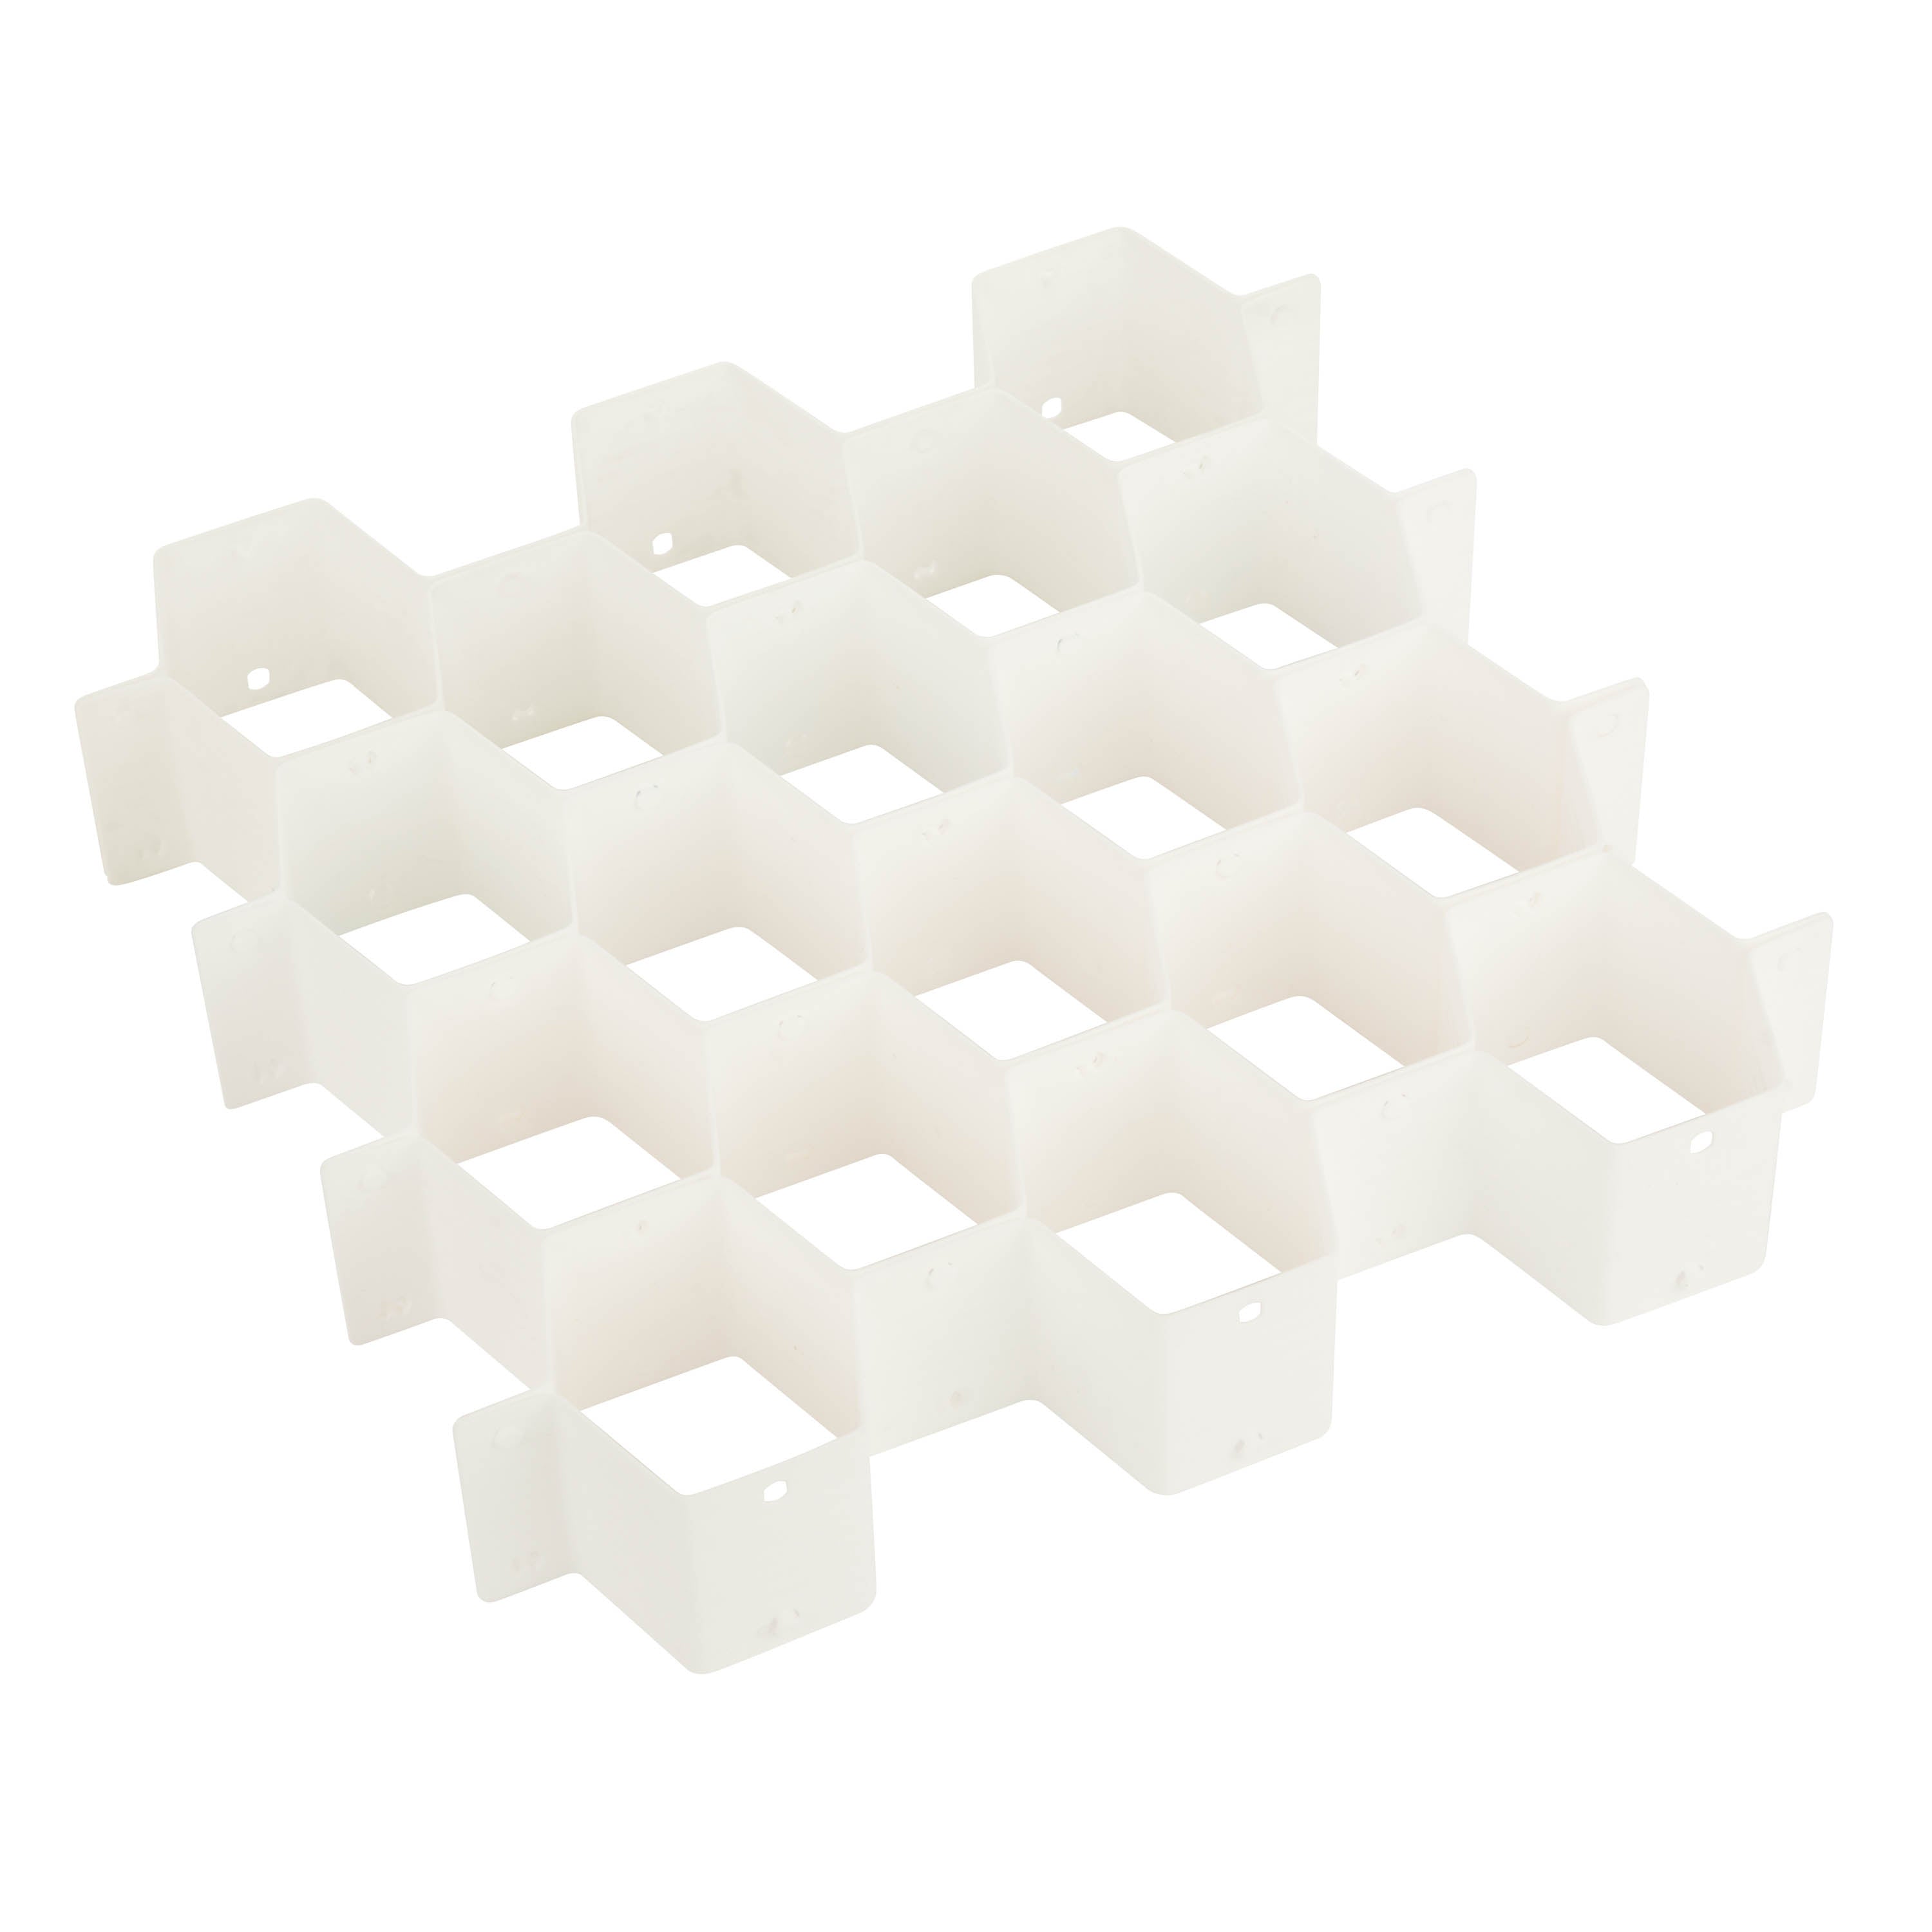 Whitmor 6025-3928 Honeycomb Drawer Organizer, 1 Count (Pack of 1), White